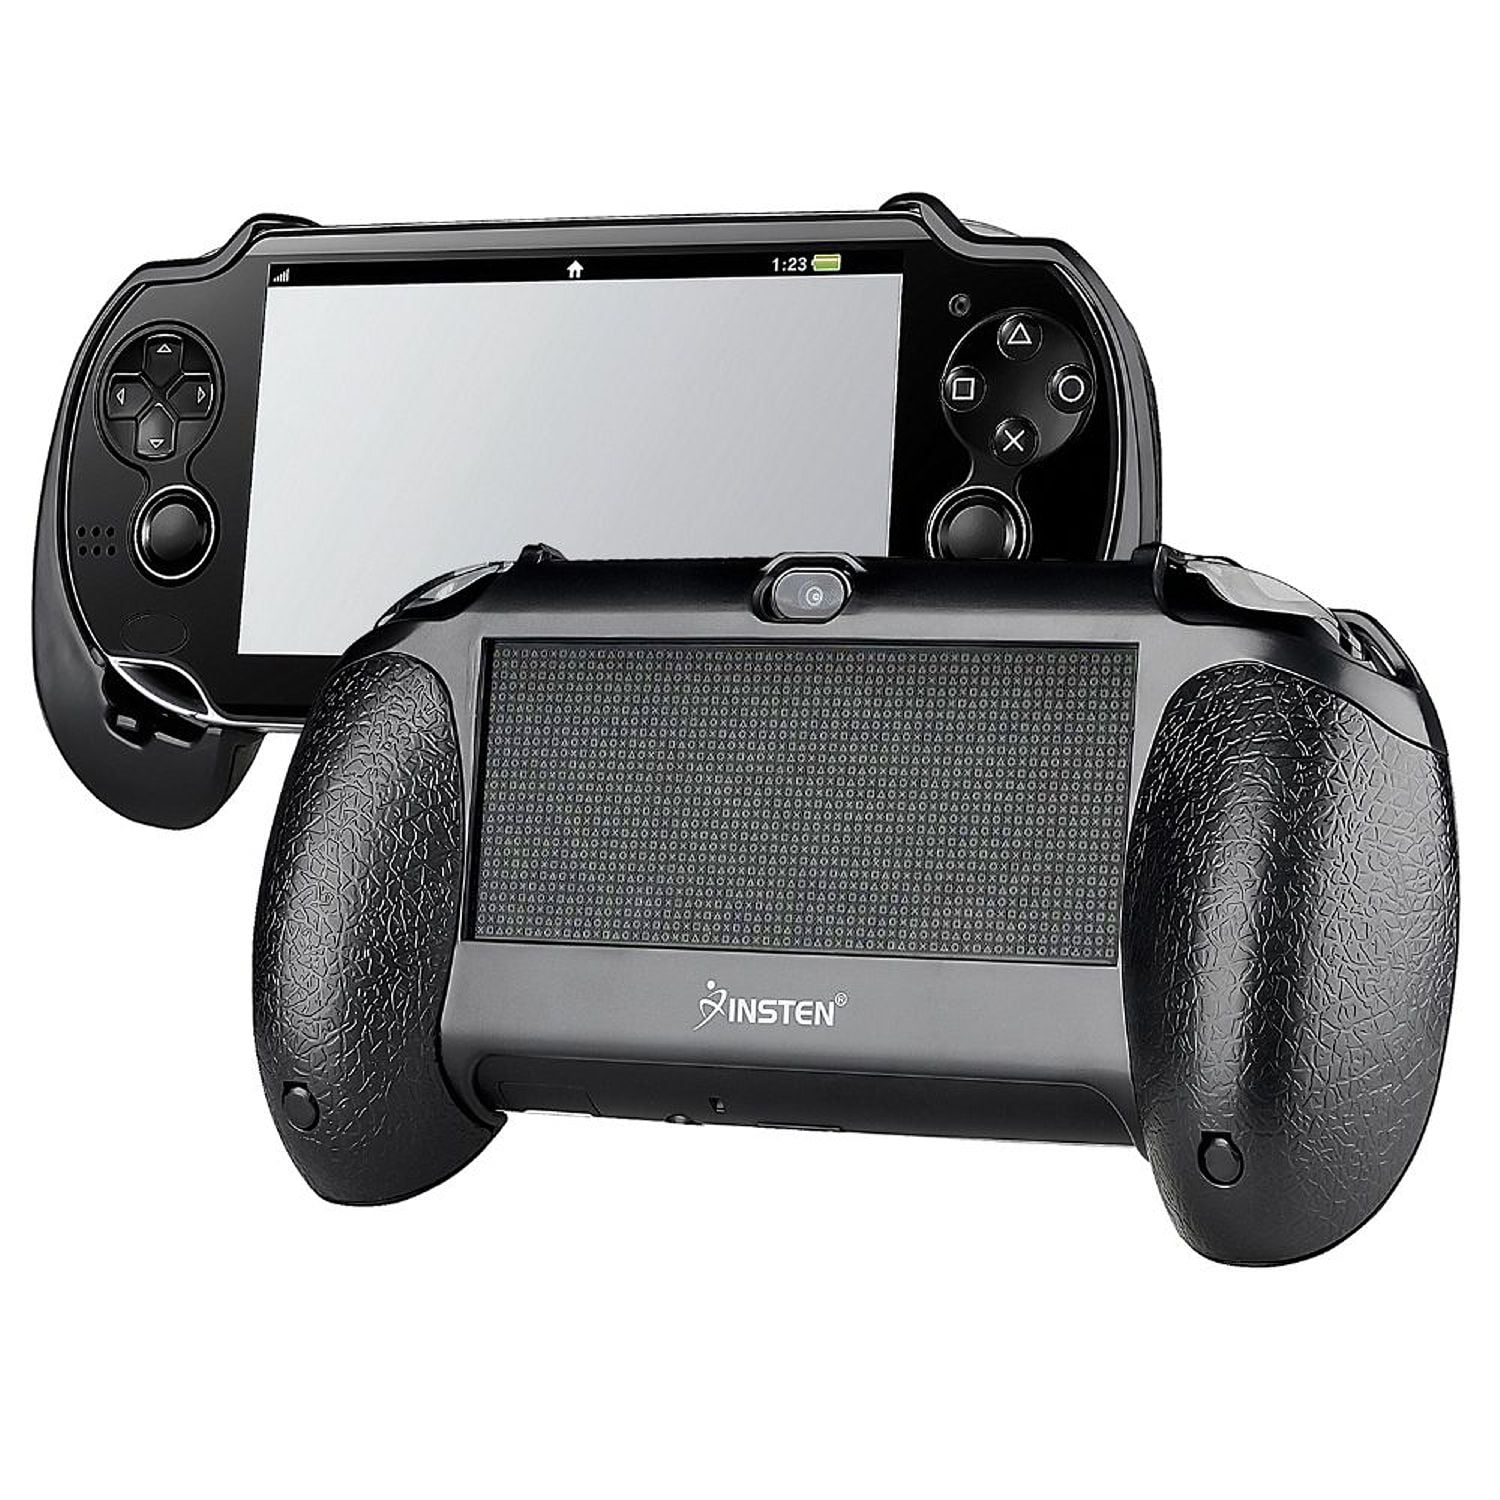 Insten Hand Grip For Sony Playstation Vita Black Walmart Com